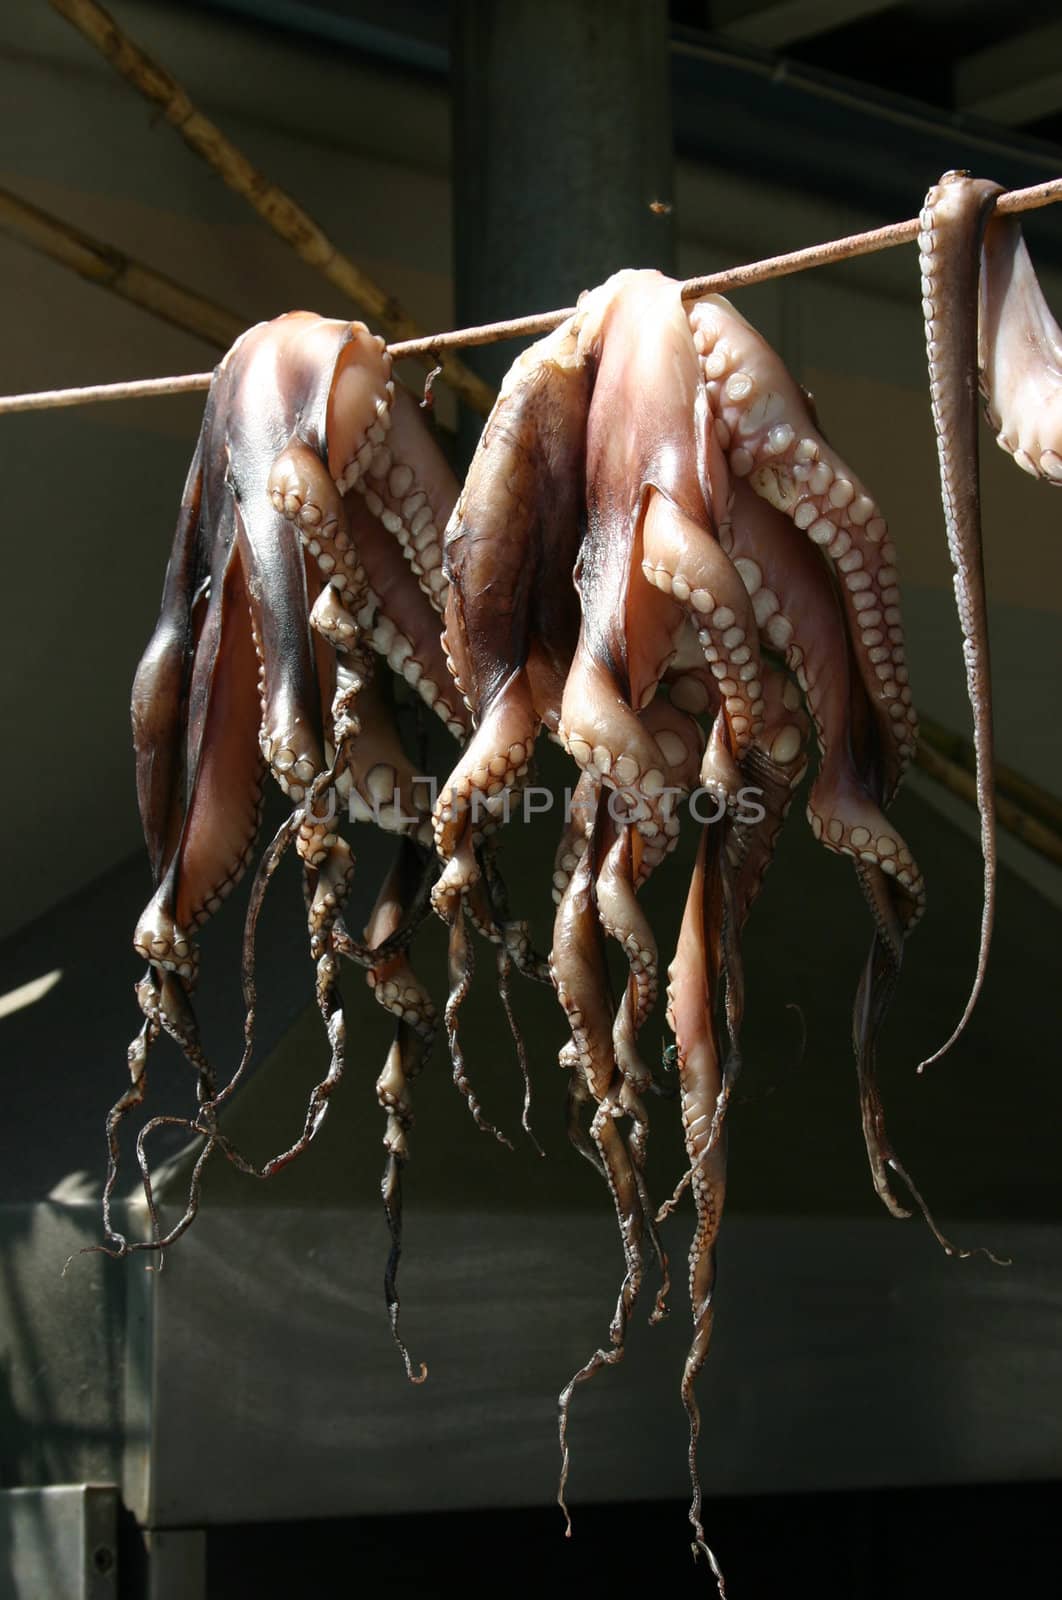 Drying octopus by anterovium